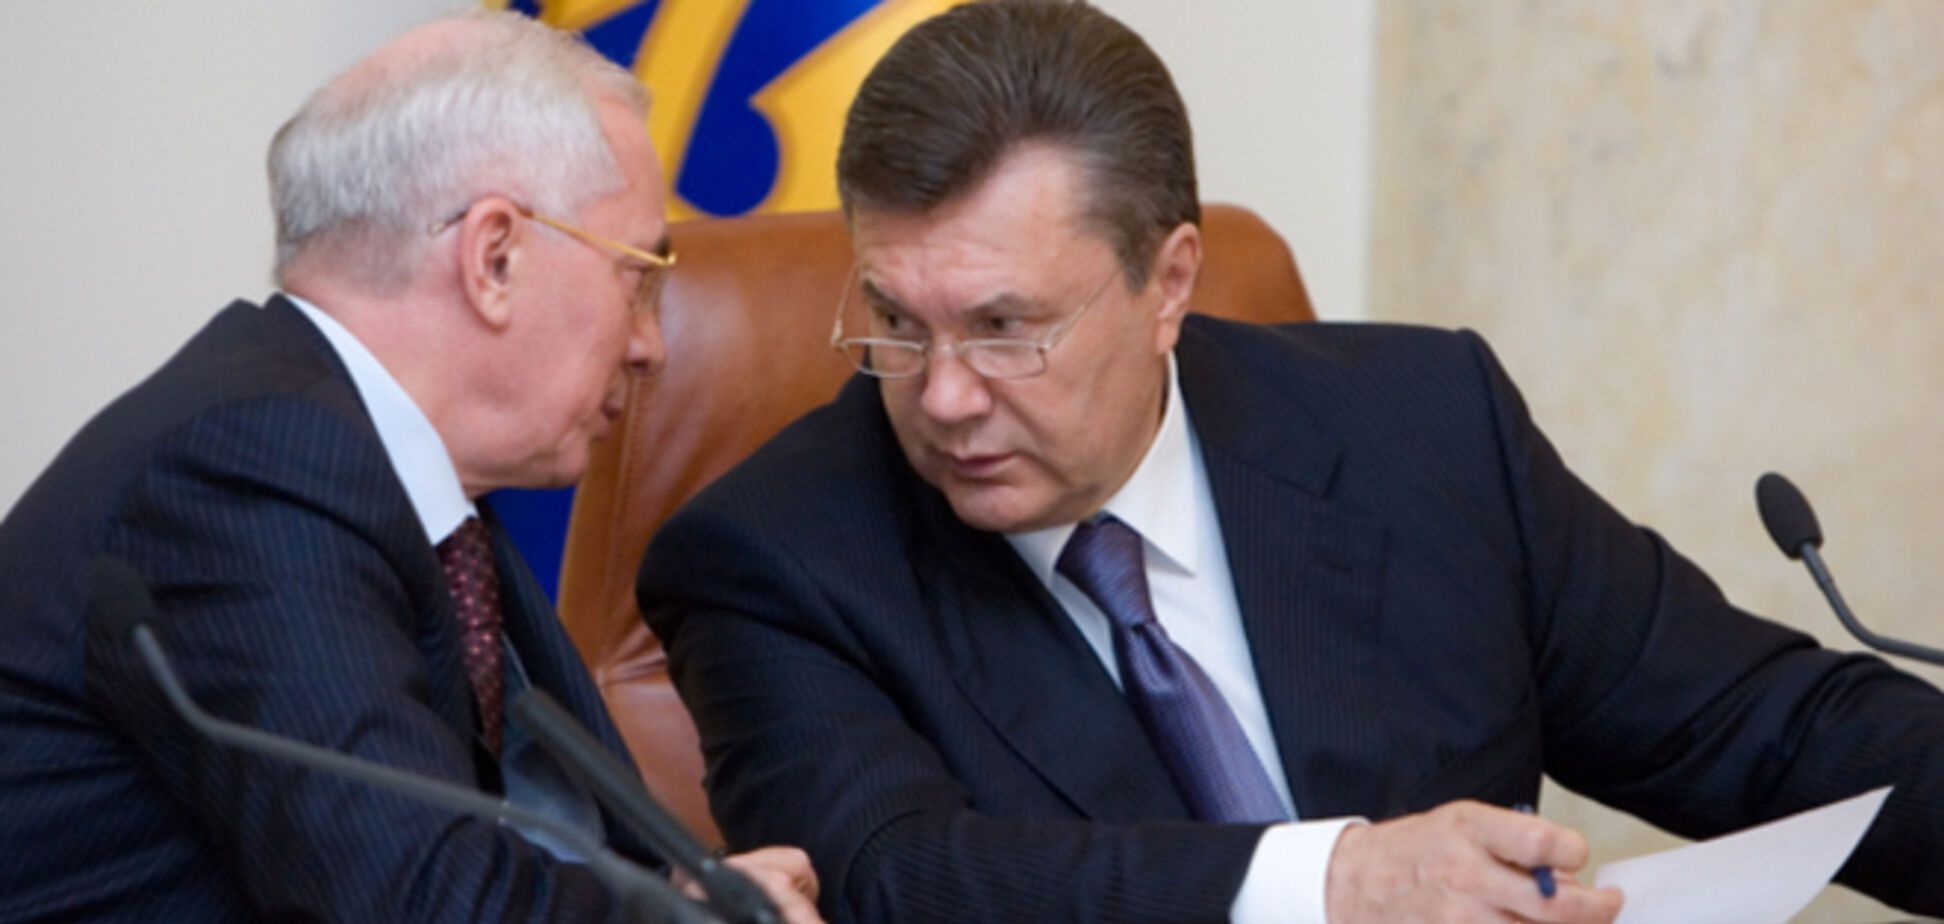 Януковича и Азарова не выдадут Украине, так как они граждане других государств - СМИ